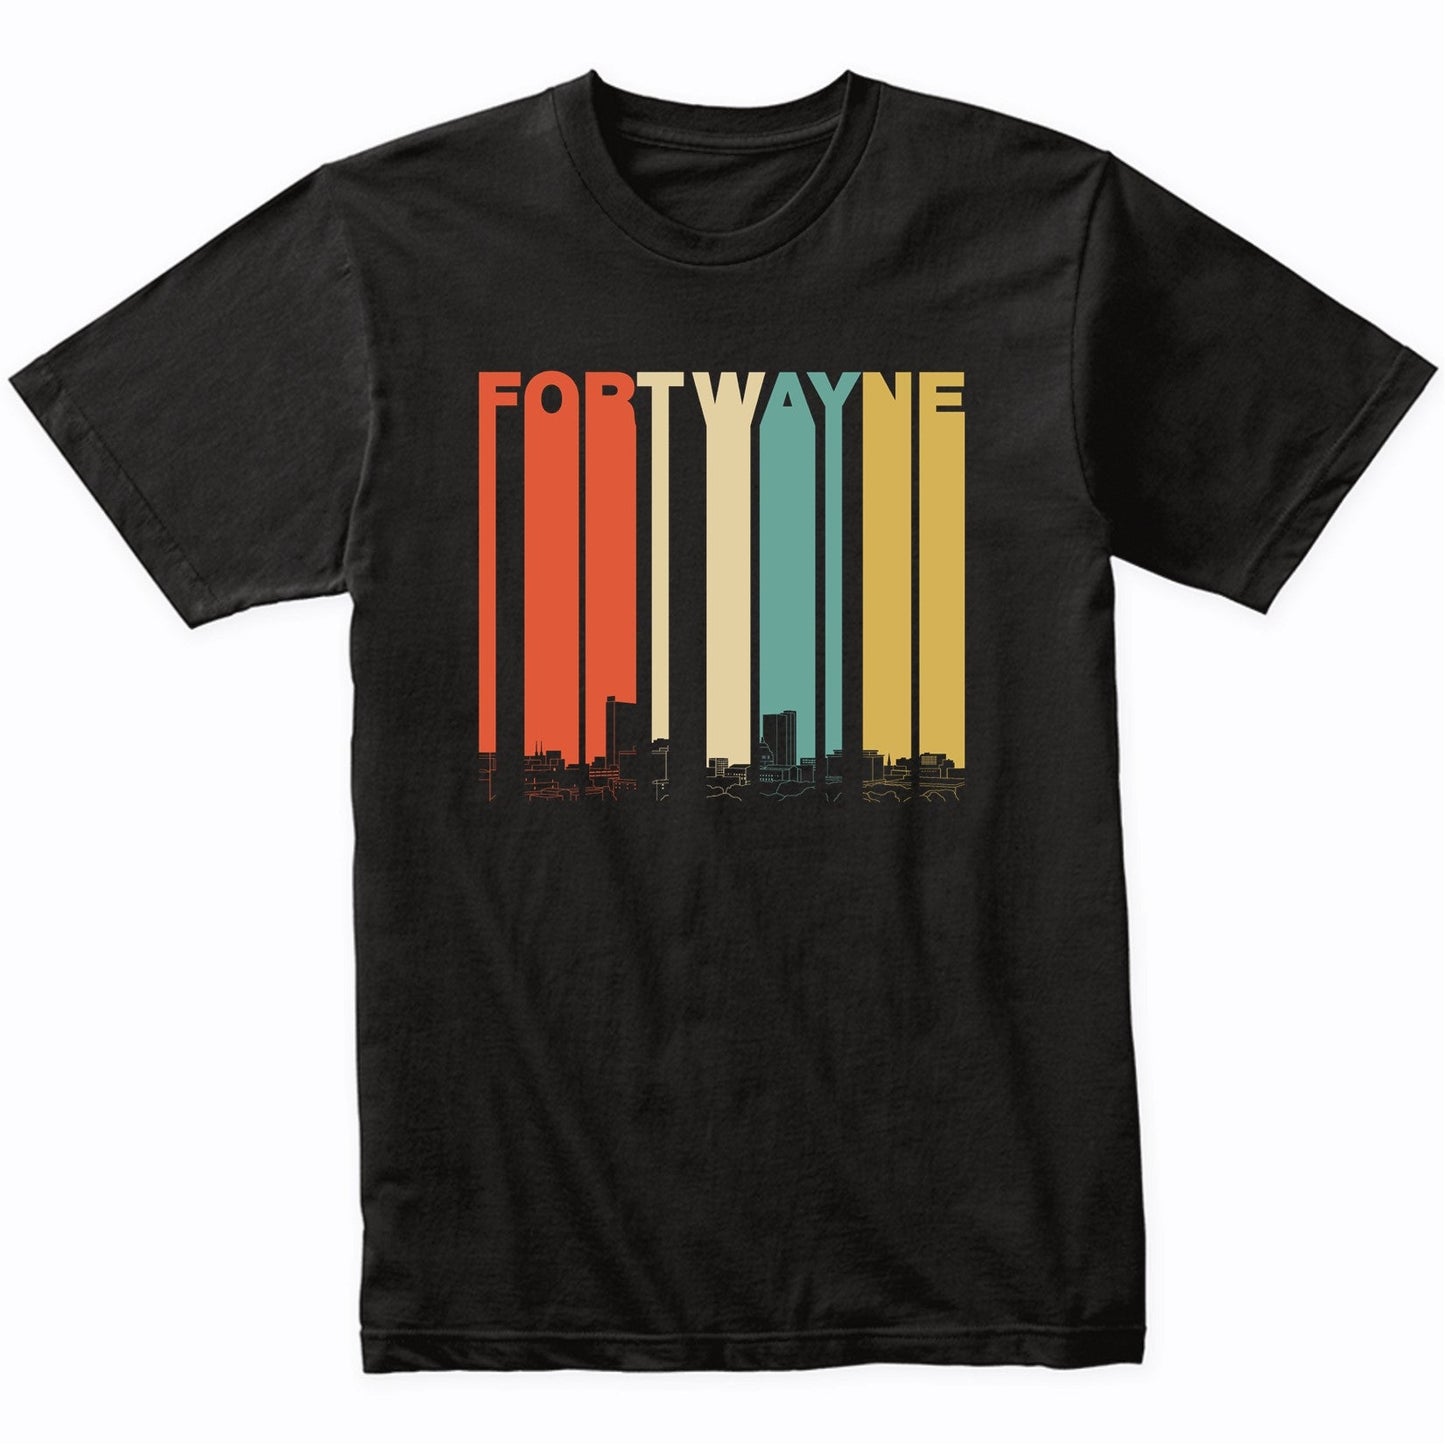 Vintage 1970's Style Fort Wayne Indiana Skyline T-Shirt